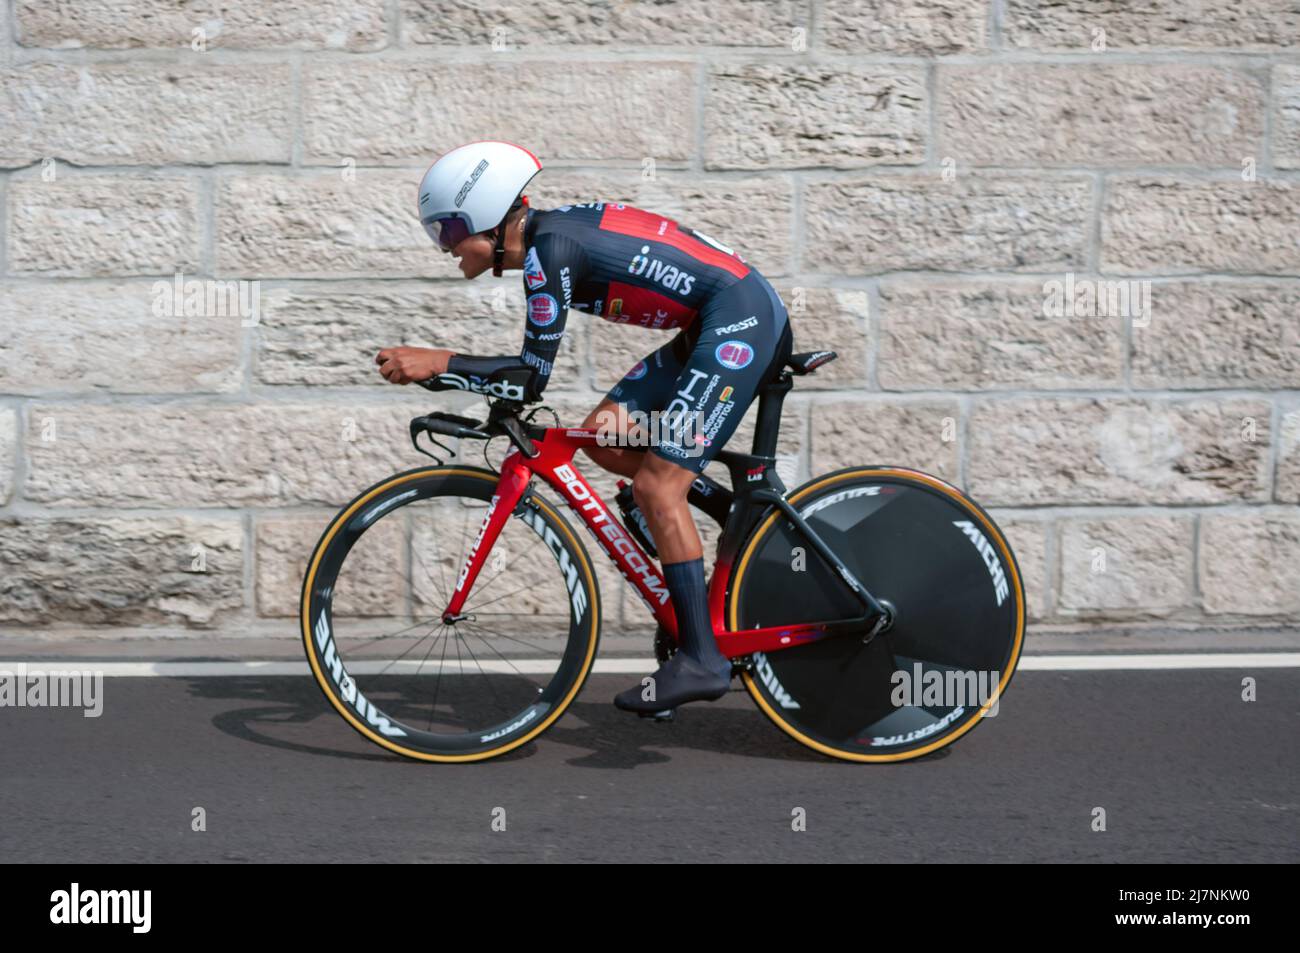 BUDAPEST, UNGARN - 07. MAI 2022: Proradfahrer Jefferson Cepeda DROHNENHOPPER - ANDRONI GIOCATTOLI, Giro D'Italia Etappe 2 Zeitfahren - Radrennen Stockfoto